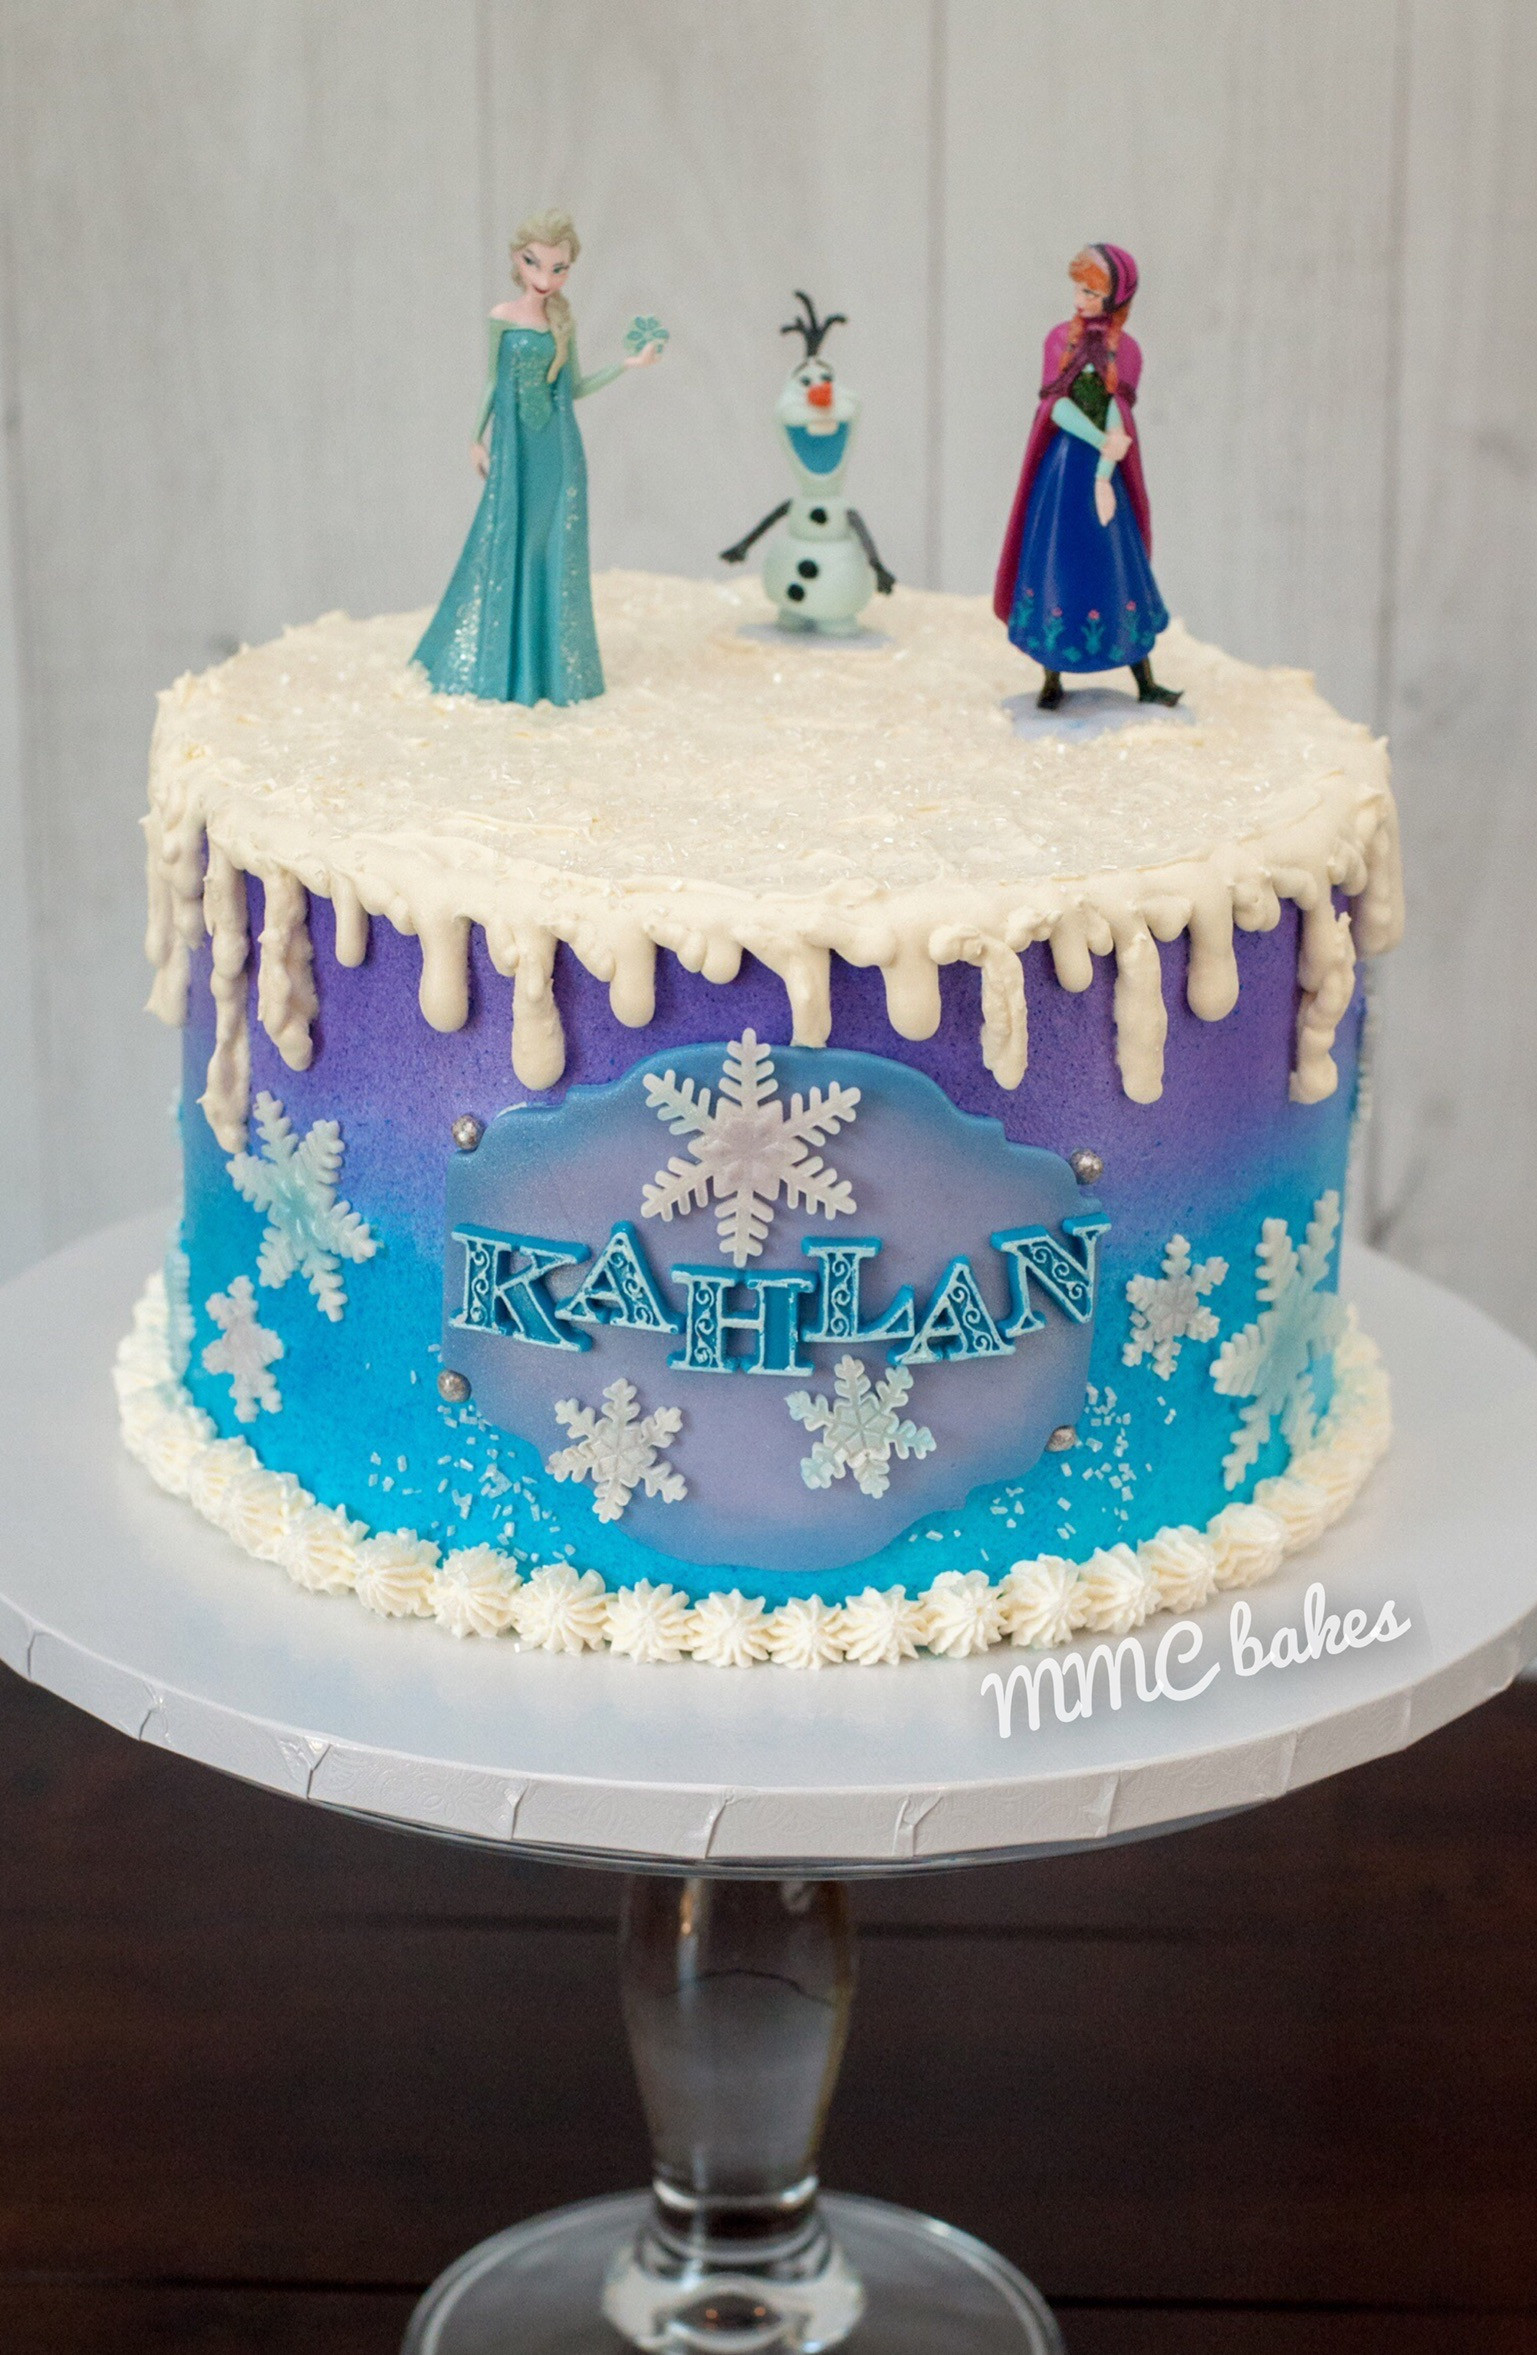 Frozen Birthday Cakes Images
 Frozen Birthday Cake – MMC Bakes